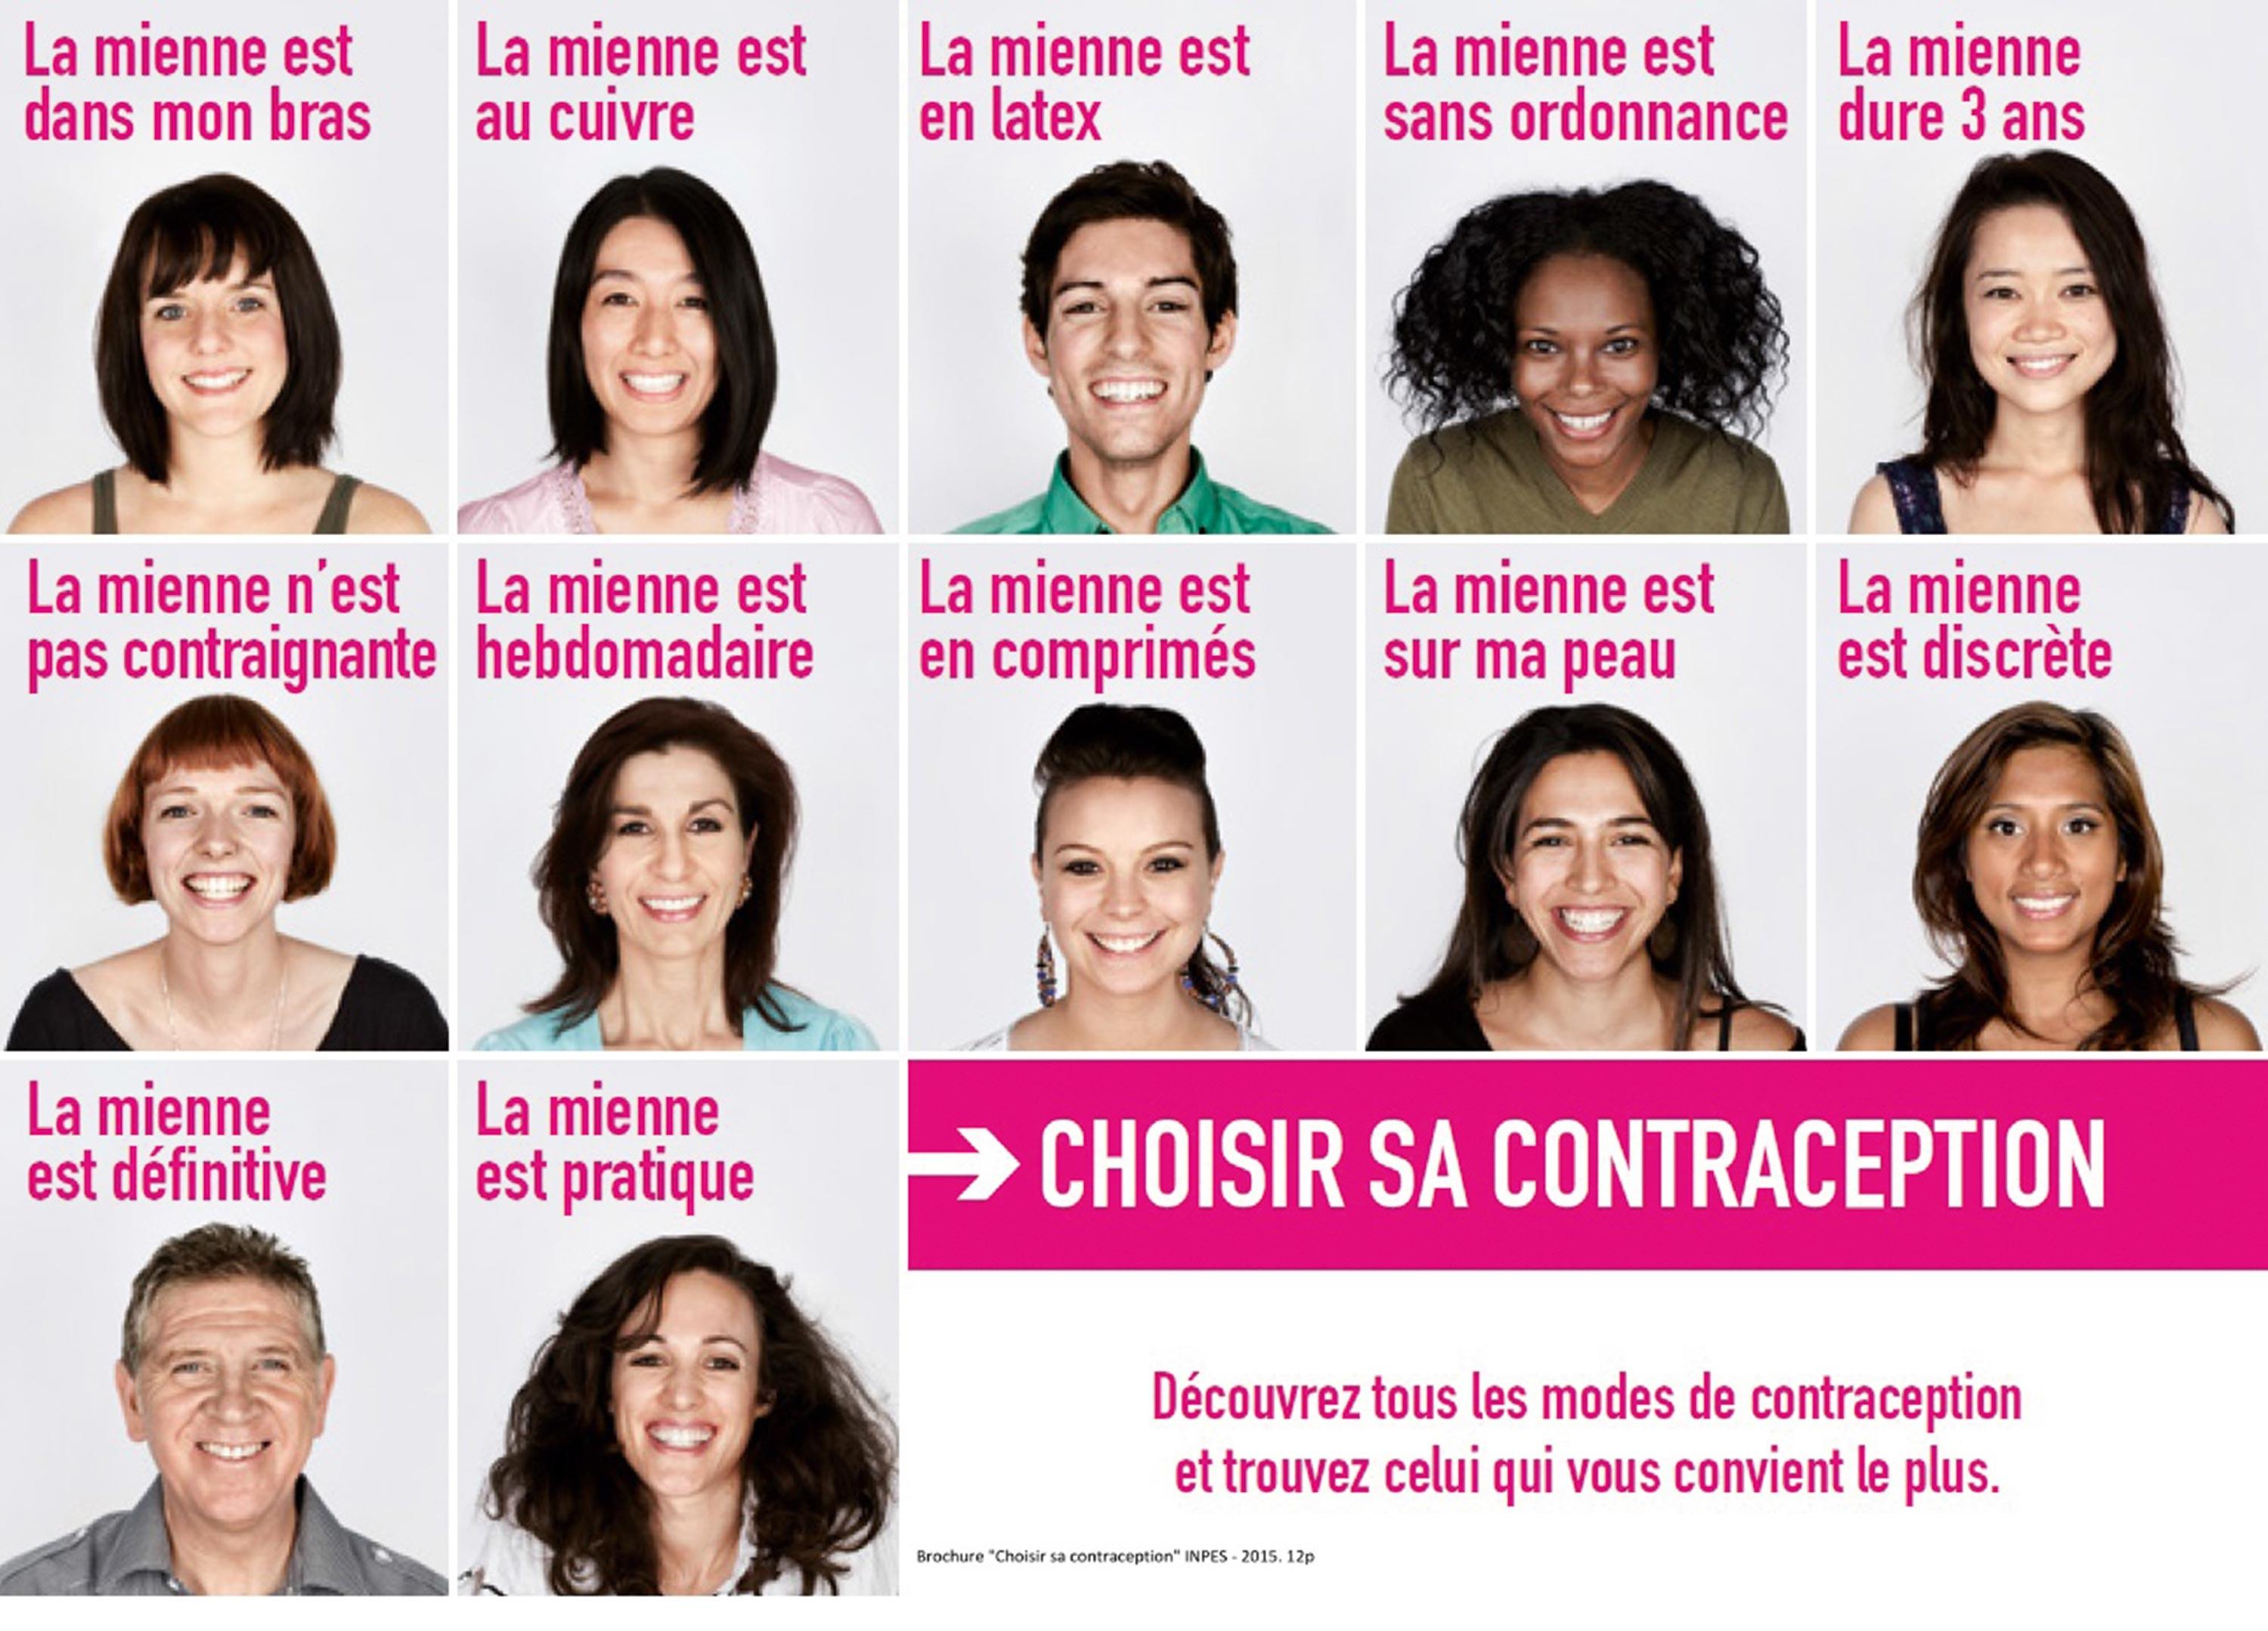 <stamp theme='svt-green1'>Doc. 7</stamp> Les différents moyens de contraception (www.choisirsacontraception.fr).